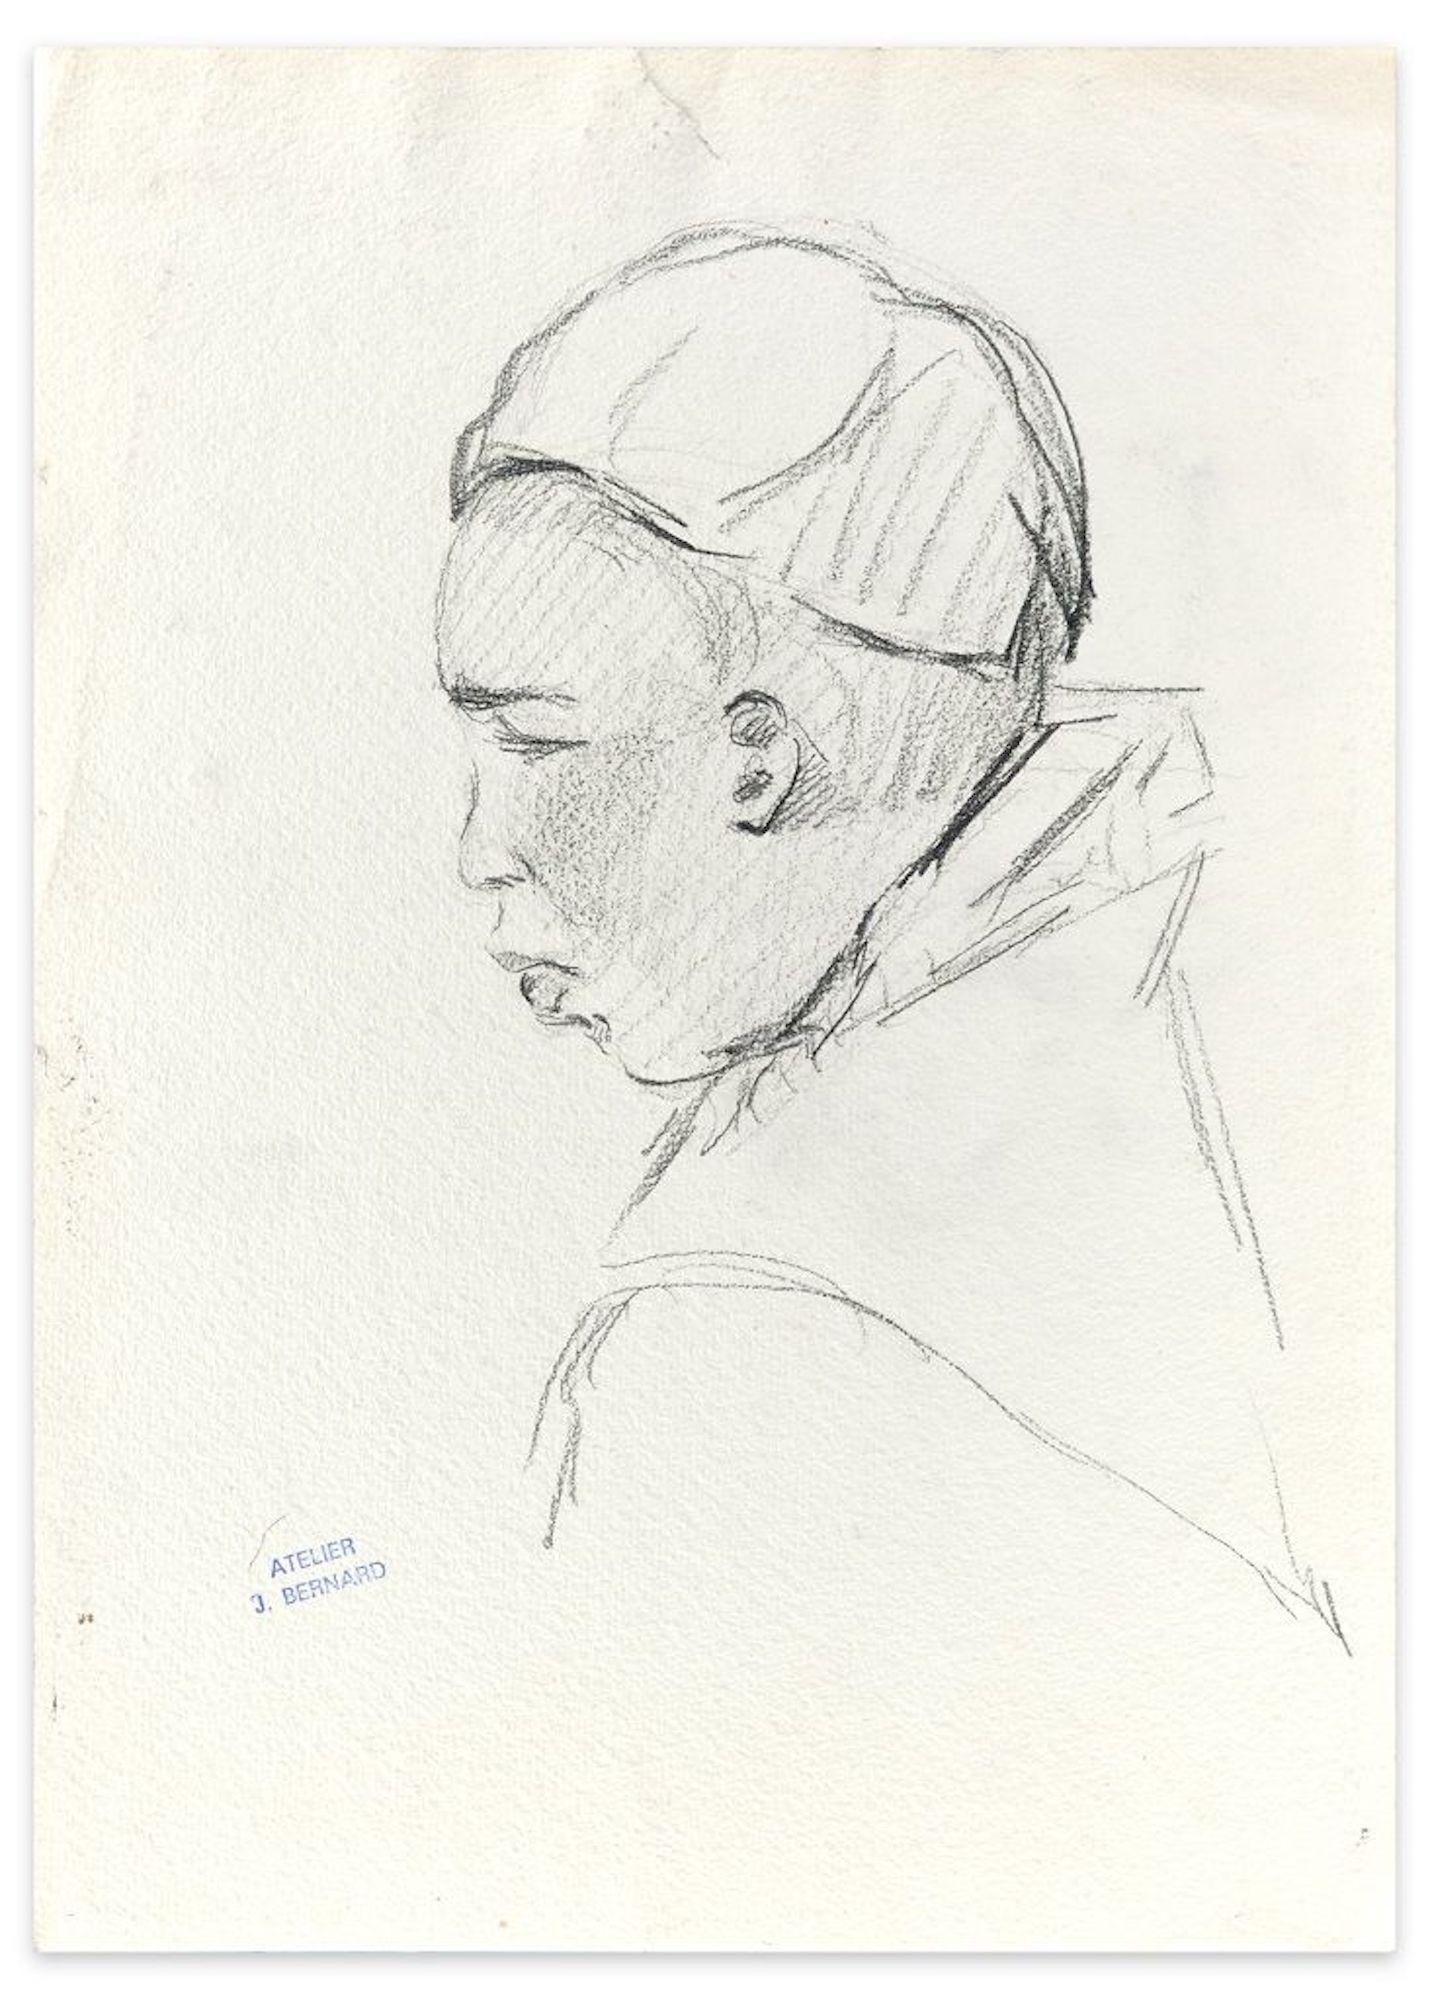 Joseph Bernard Figurative Art - A Monk - Original Charcoal Drawing by J. Bernard - Early 1900